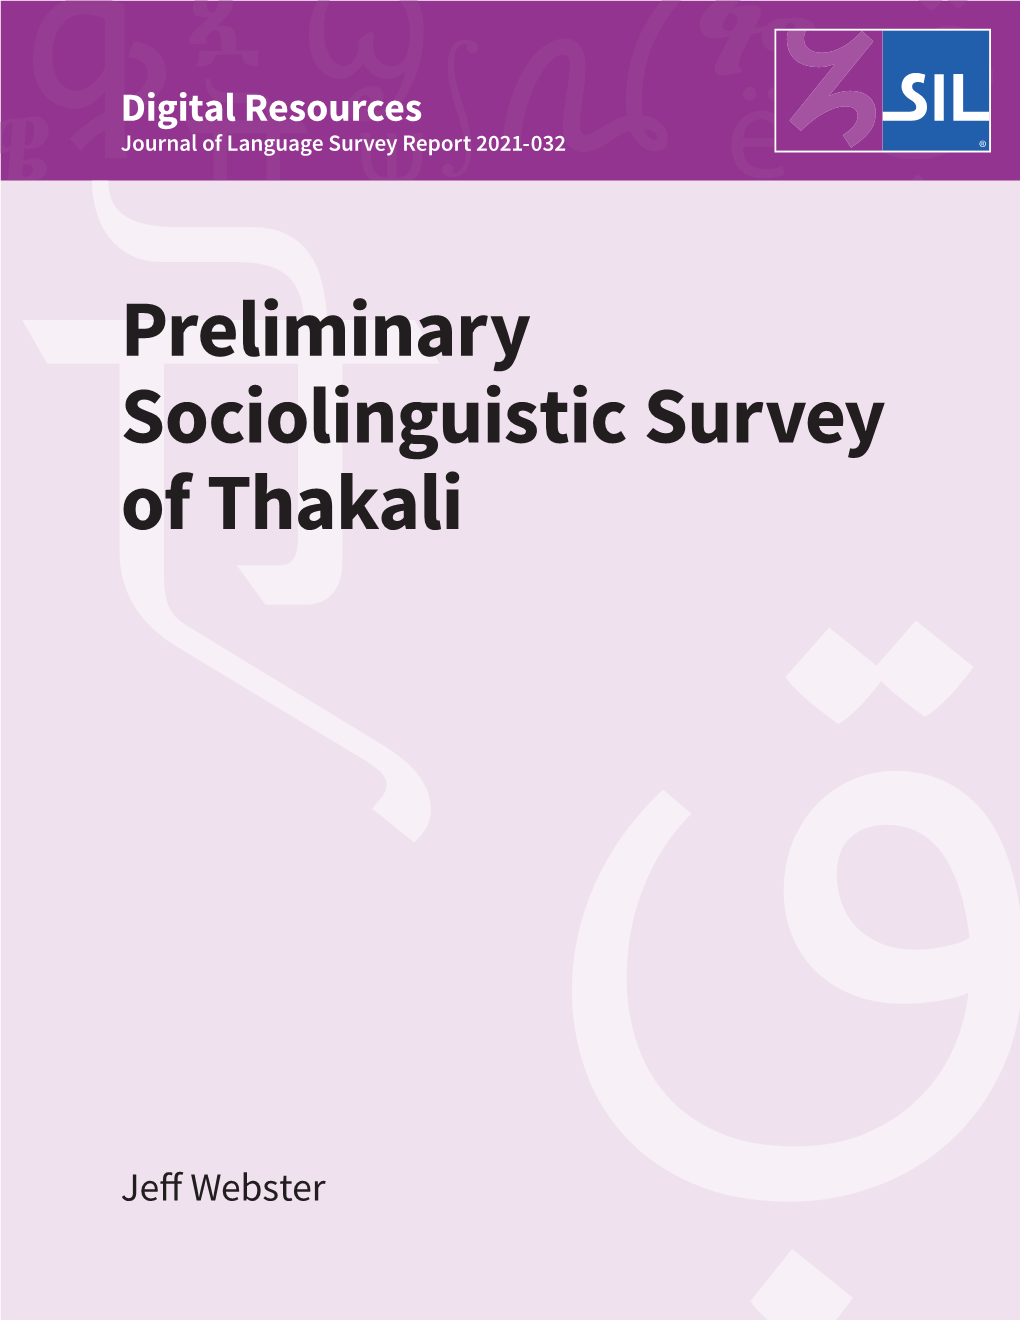 A Preliminary Sociolinguistic Survey of Thakali